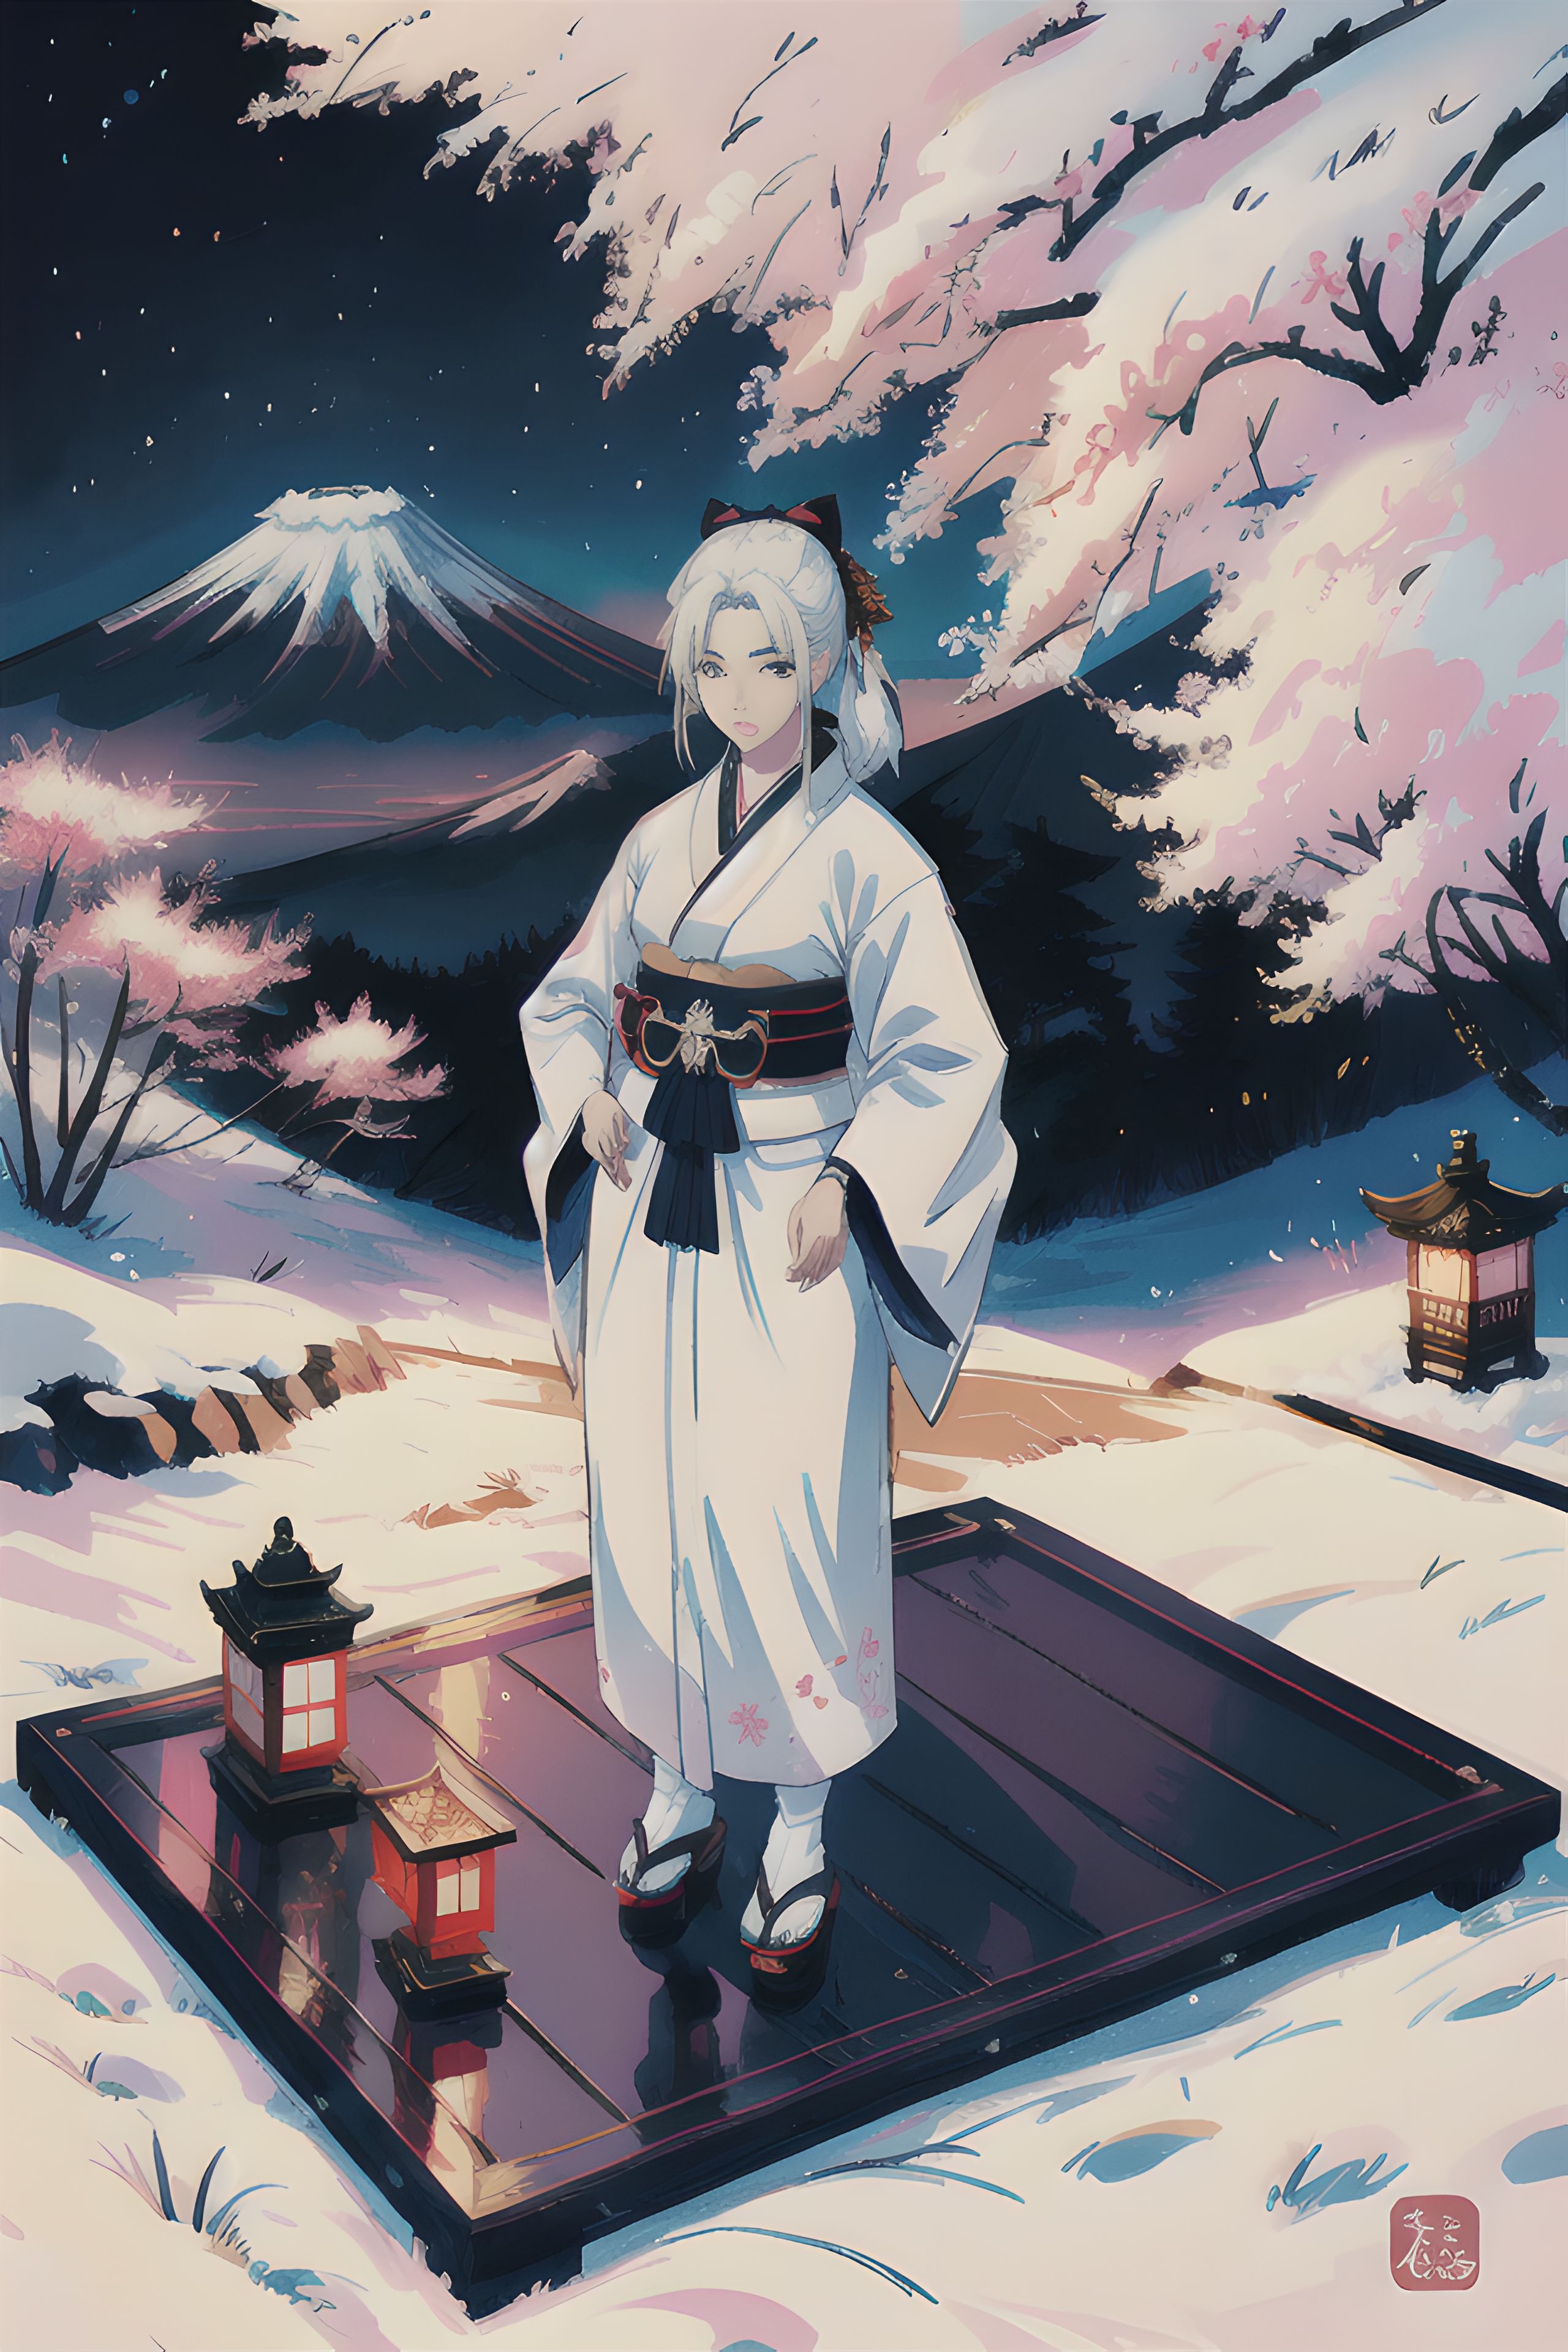 Anime girl, white hair, samurai